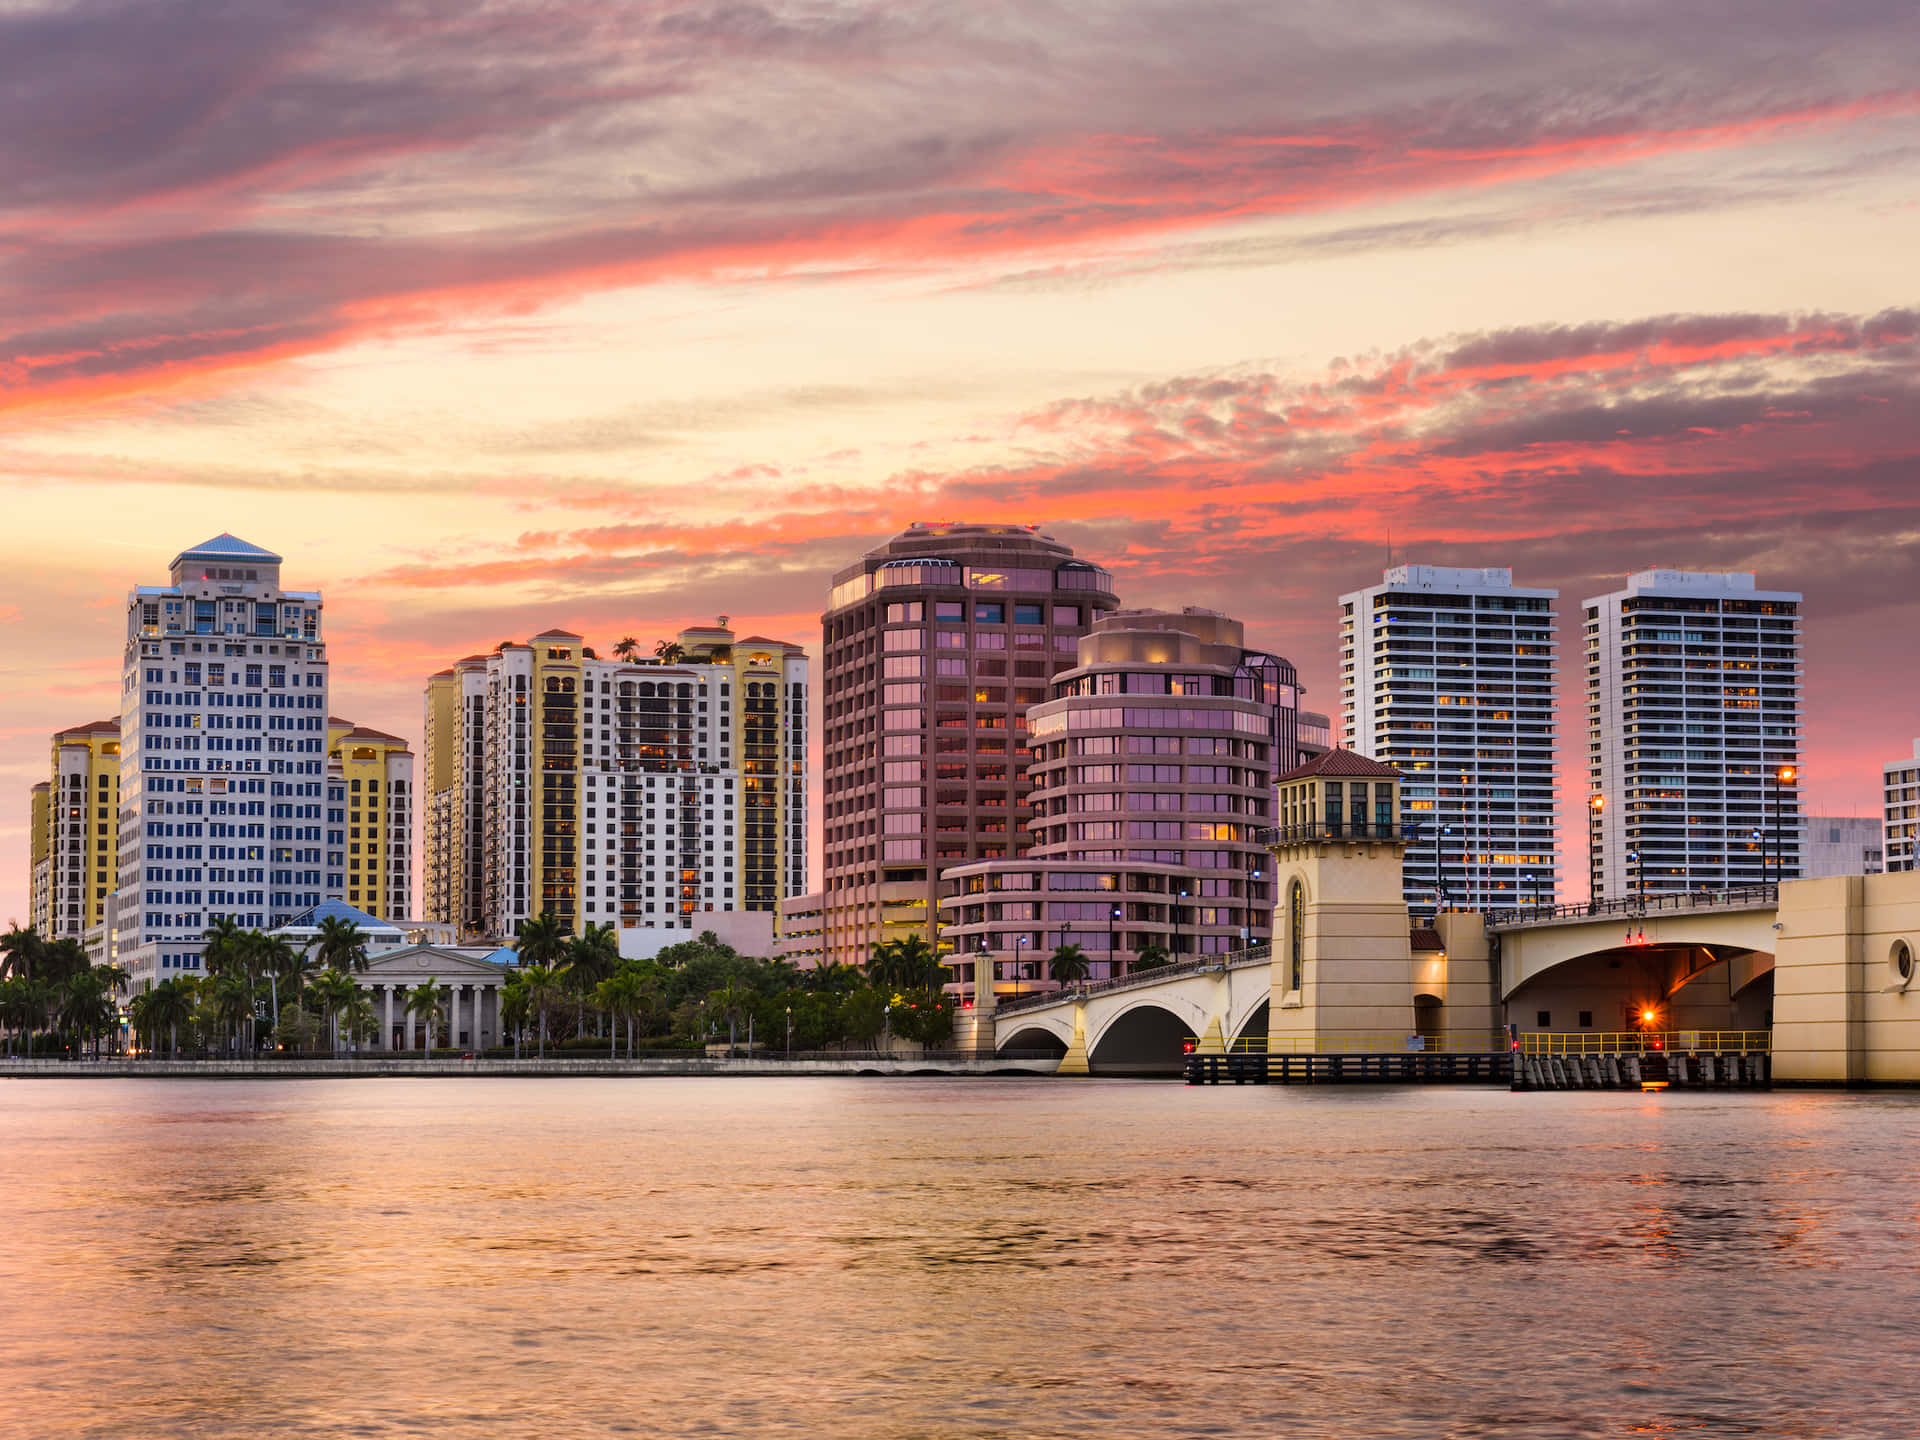 The vibrant city skyline of Miami, Florida